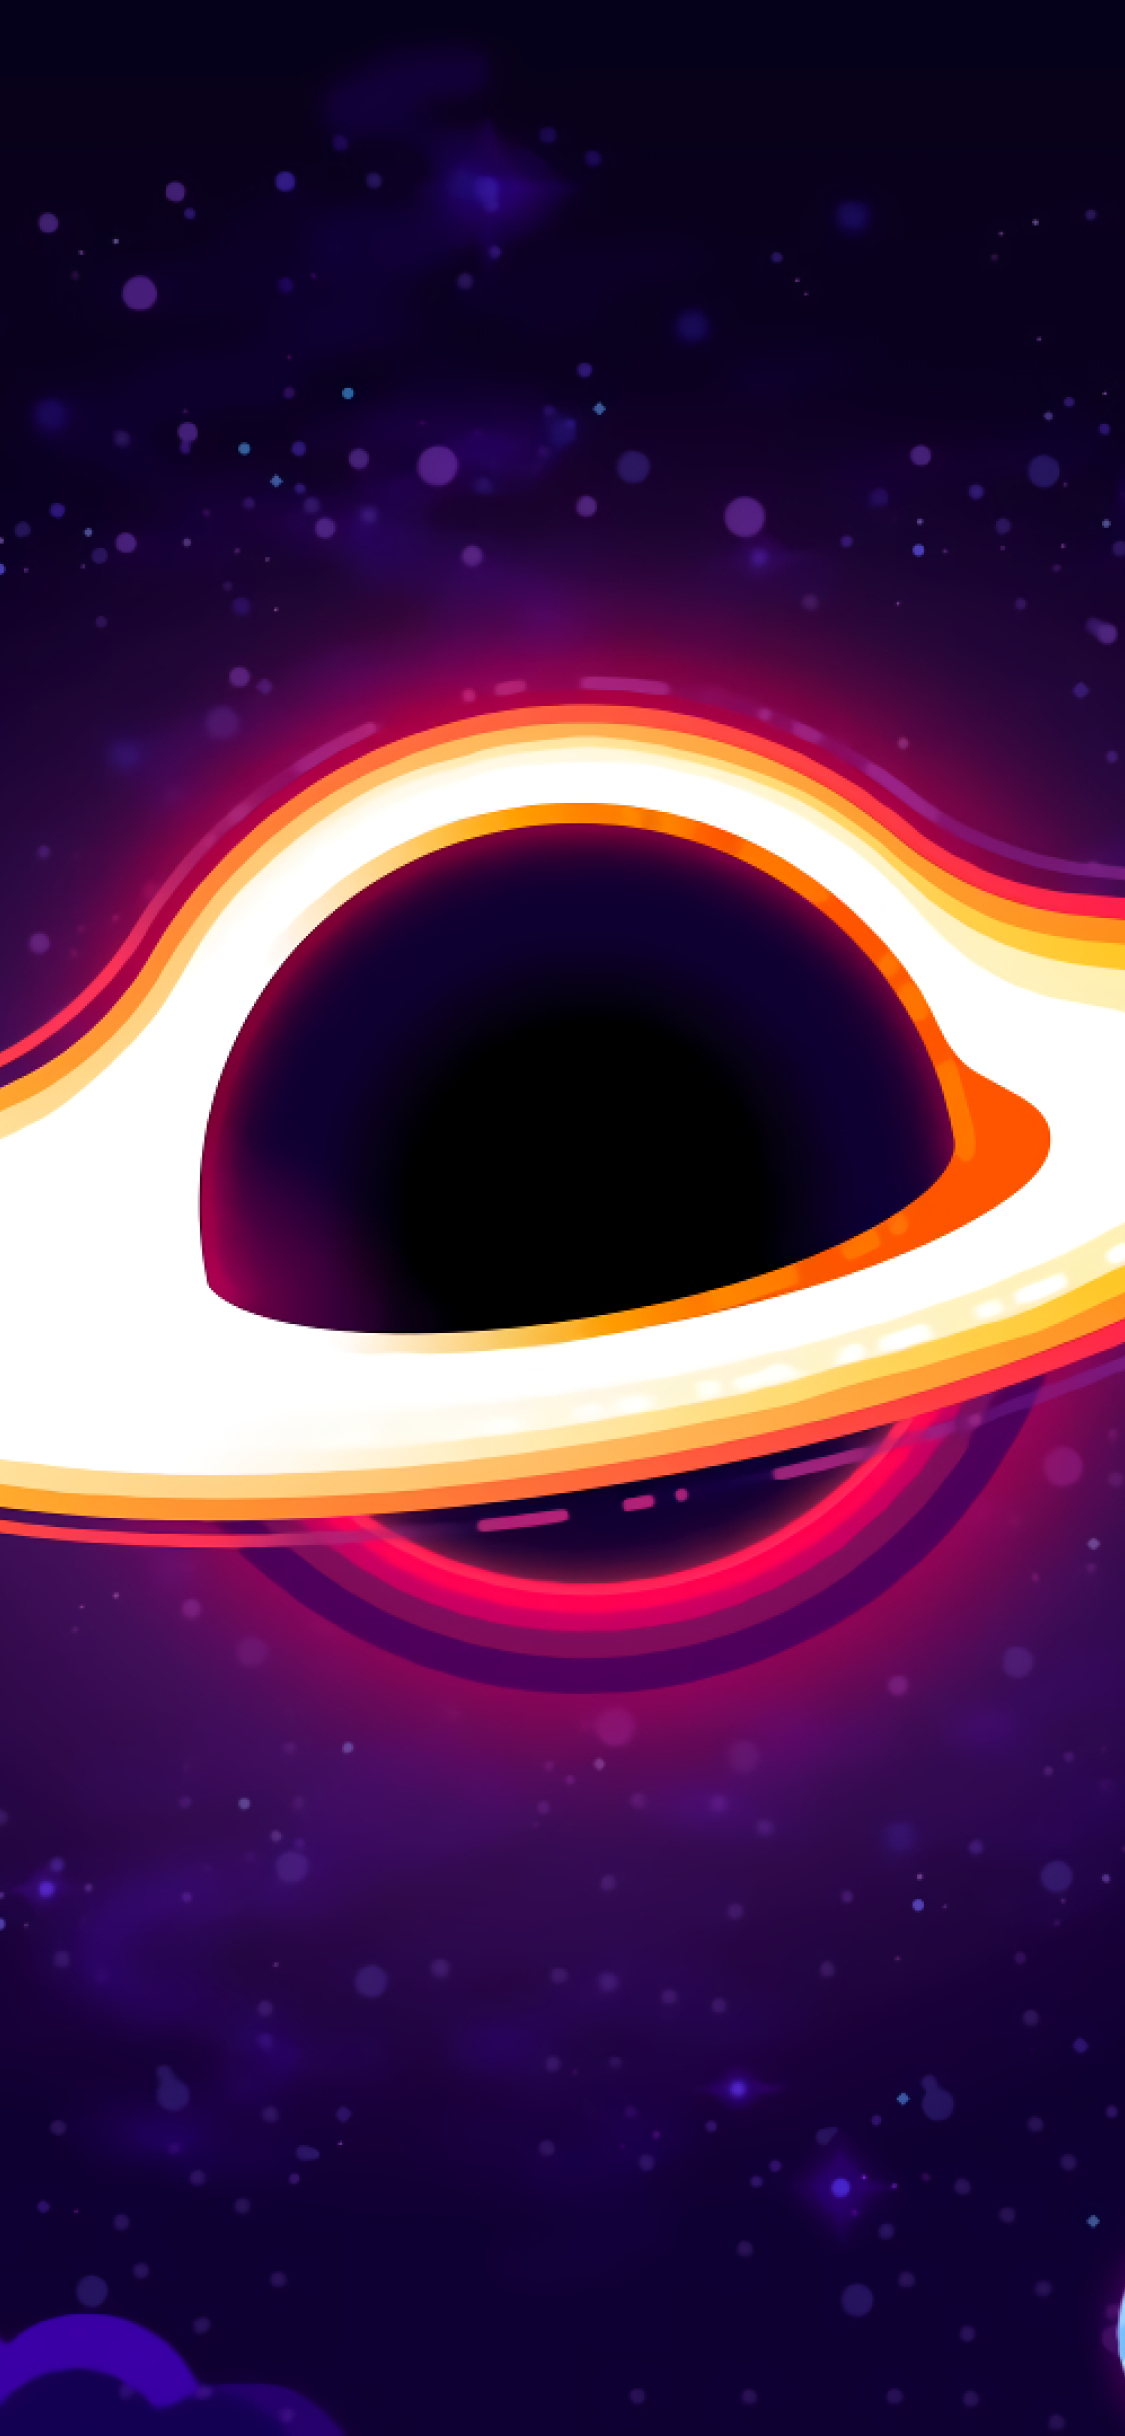 Gargantua black hole Wallpaper 4K Planet Earth Cosmos Space 9659